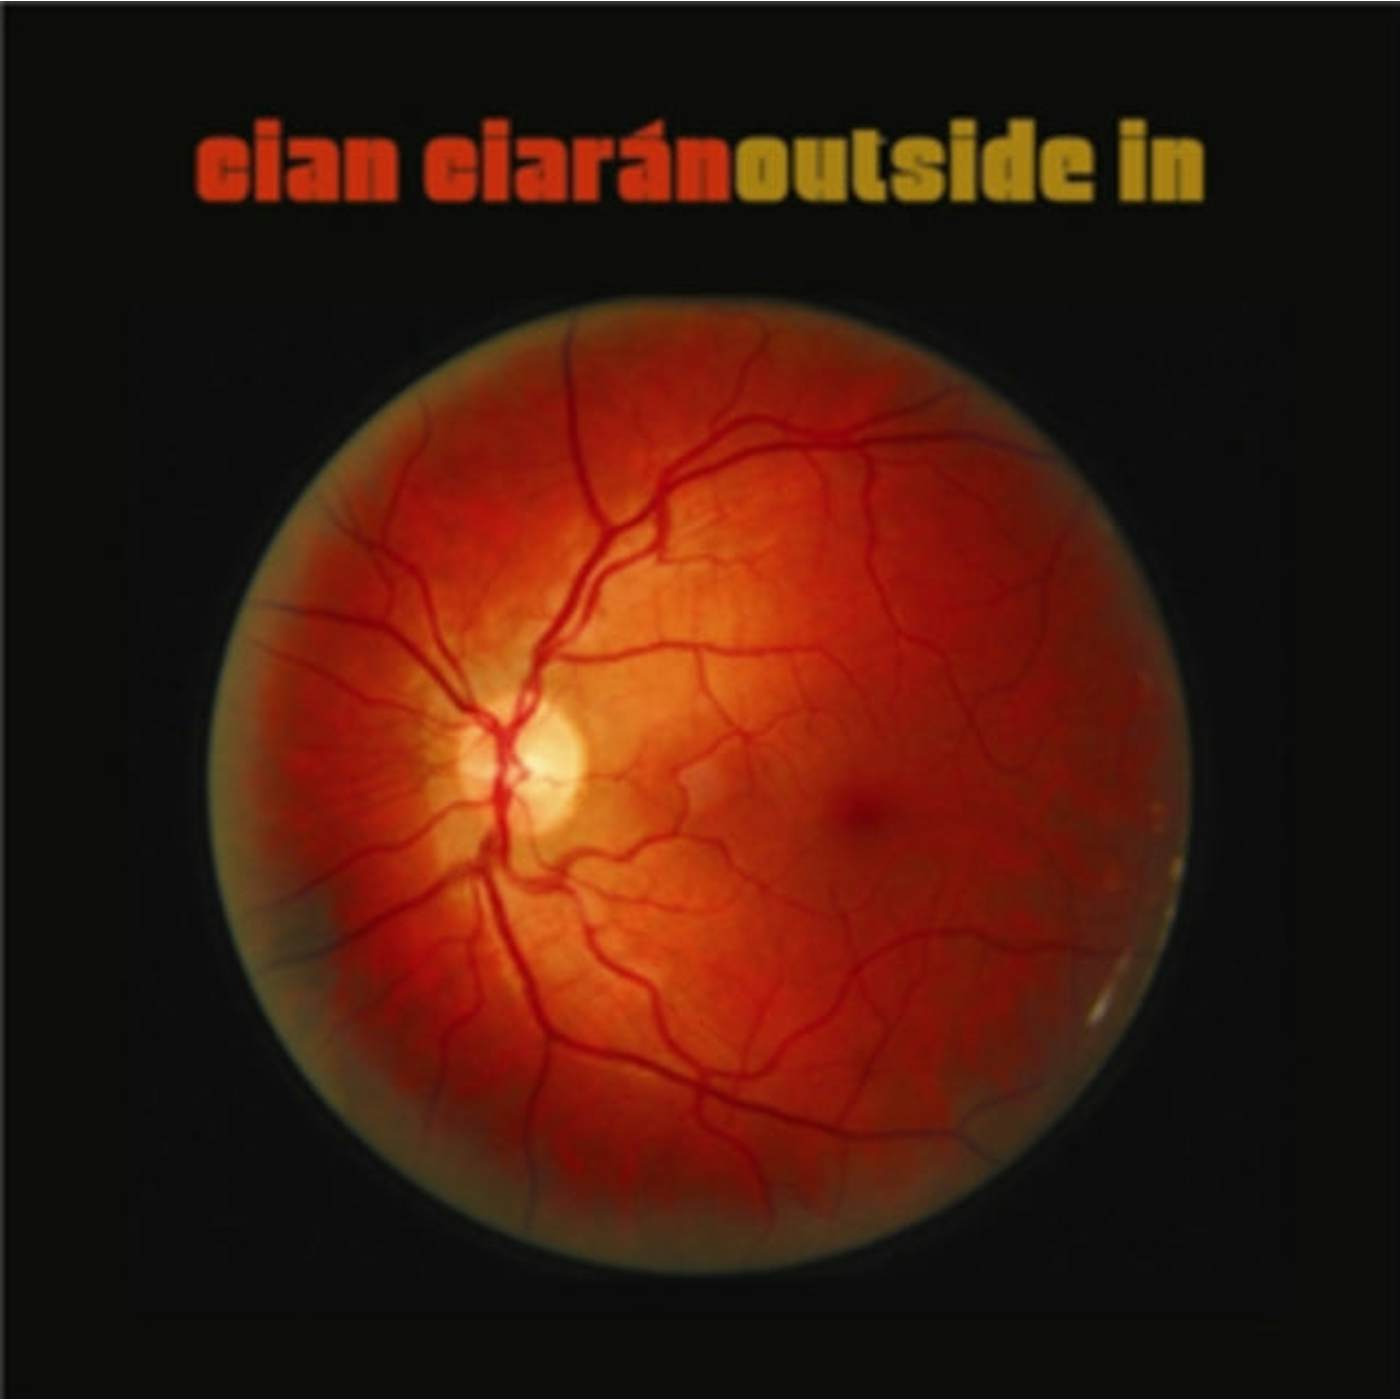 Cian Ciaran LP - Outside In (Vinyl)